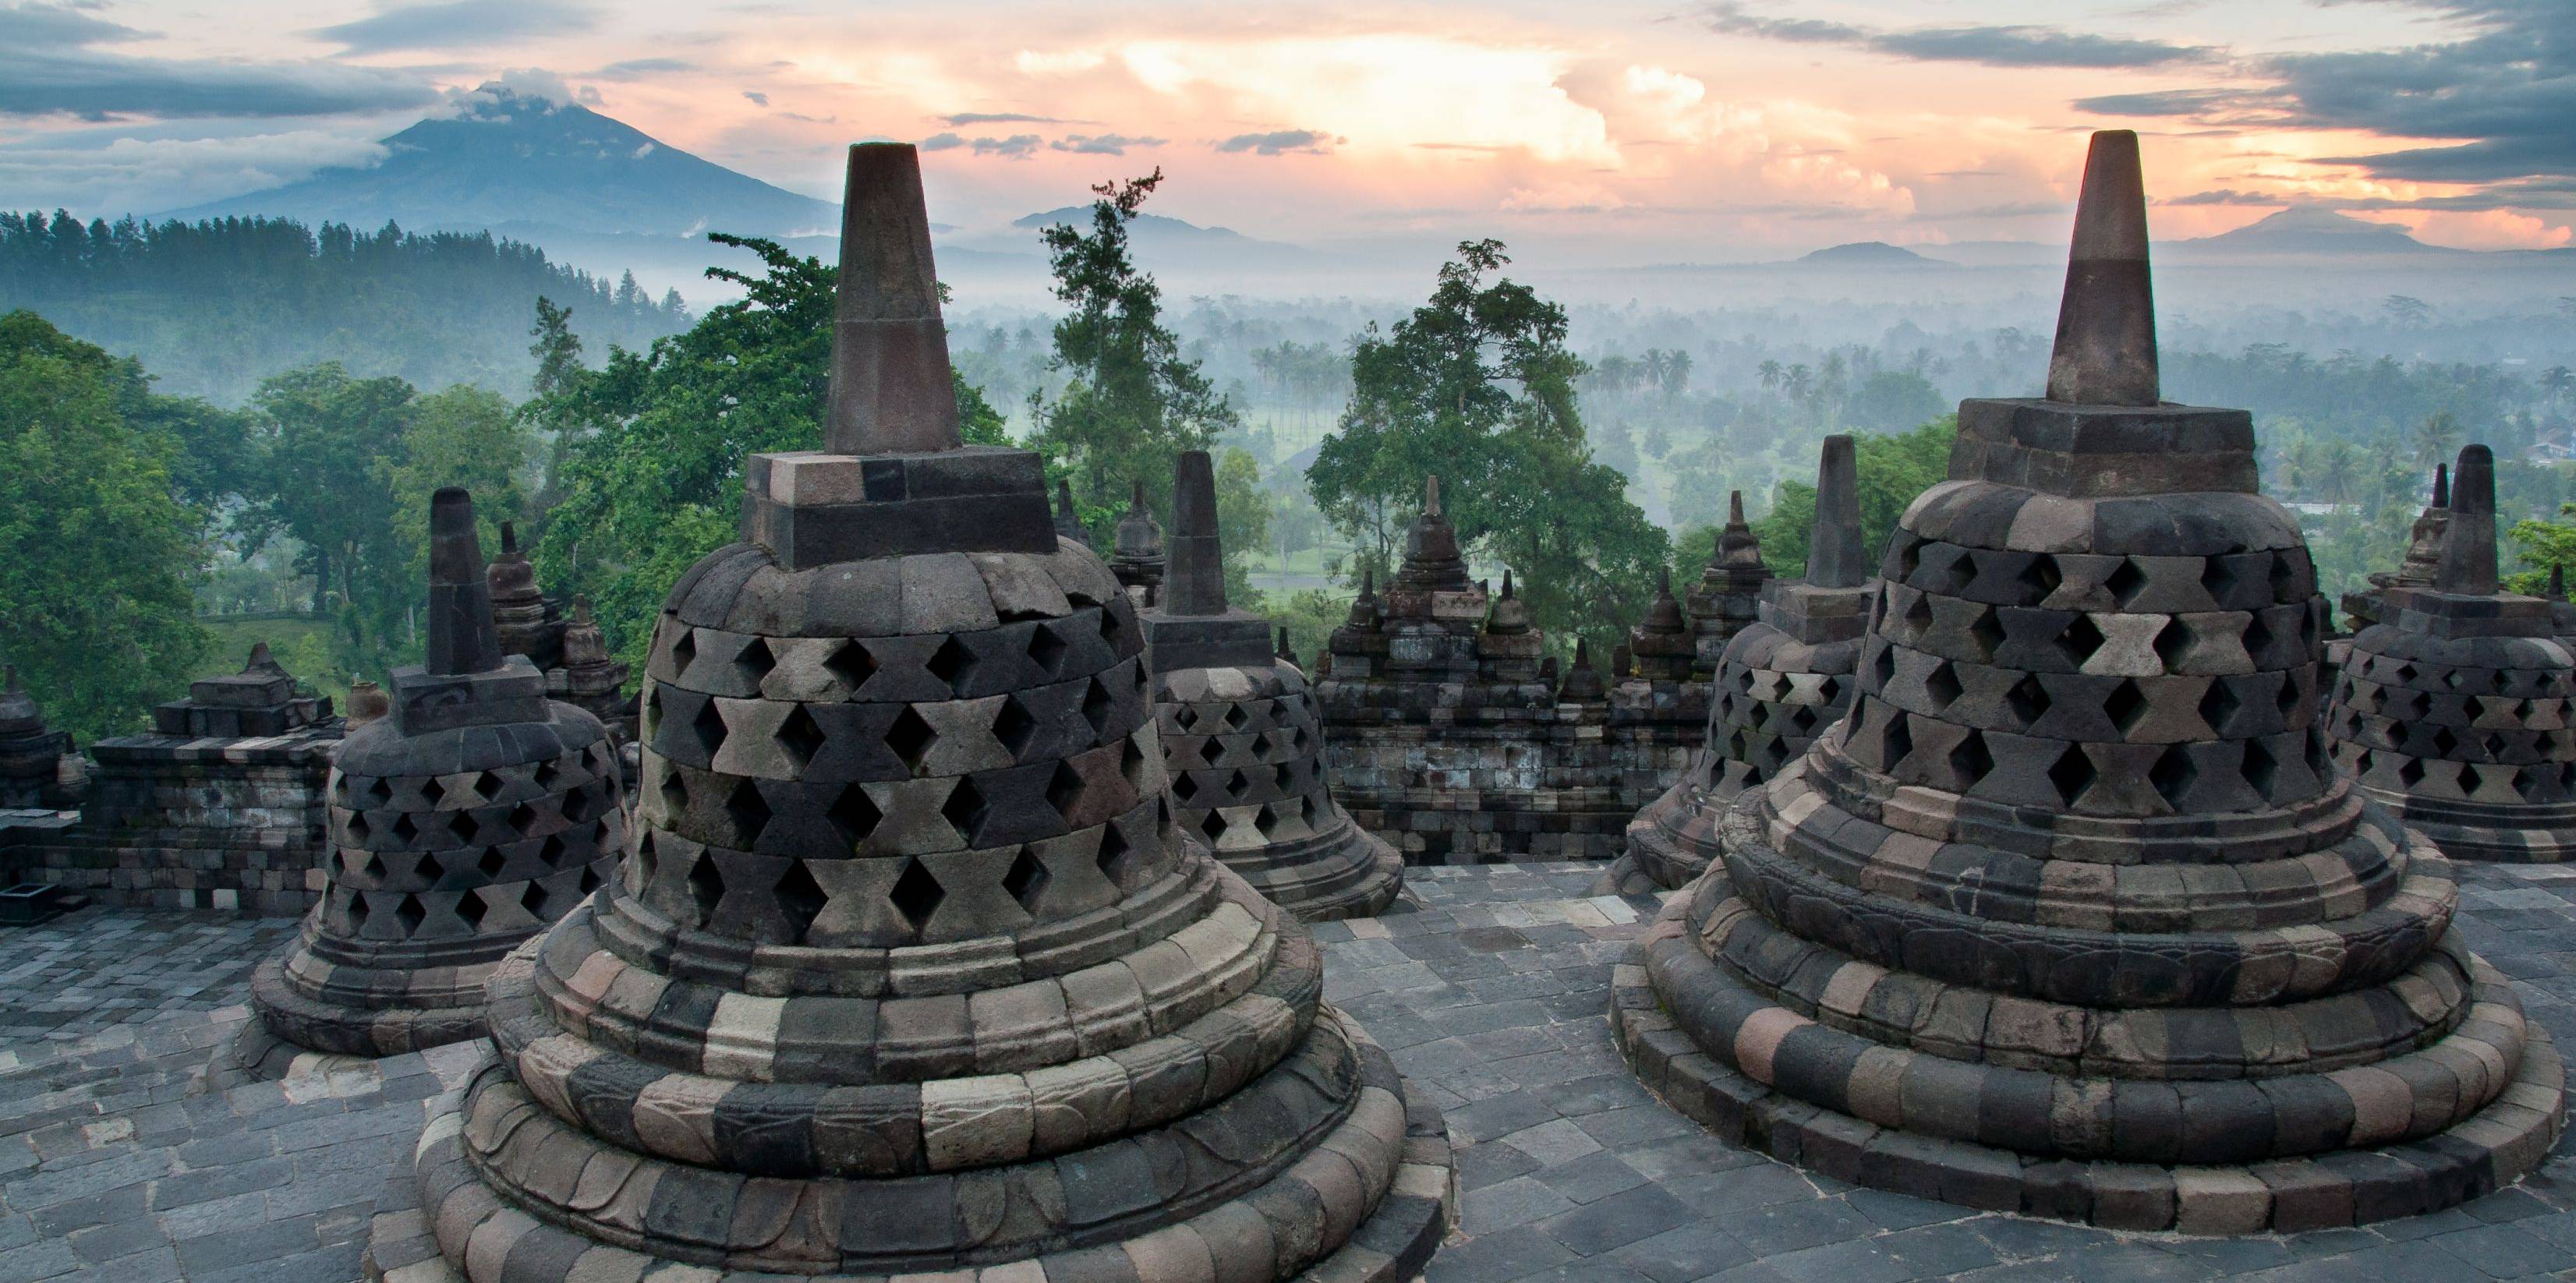 Arrivo a Yogyakarta e visita al Borobudur